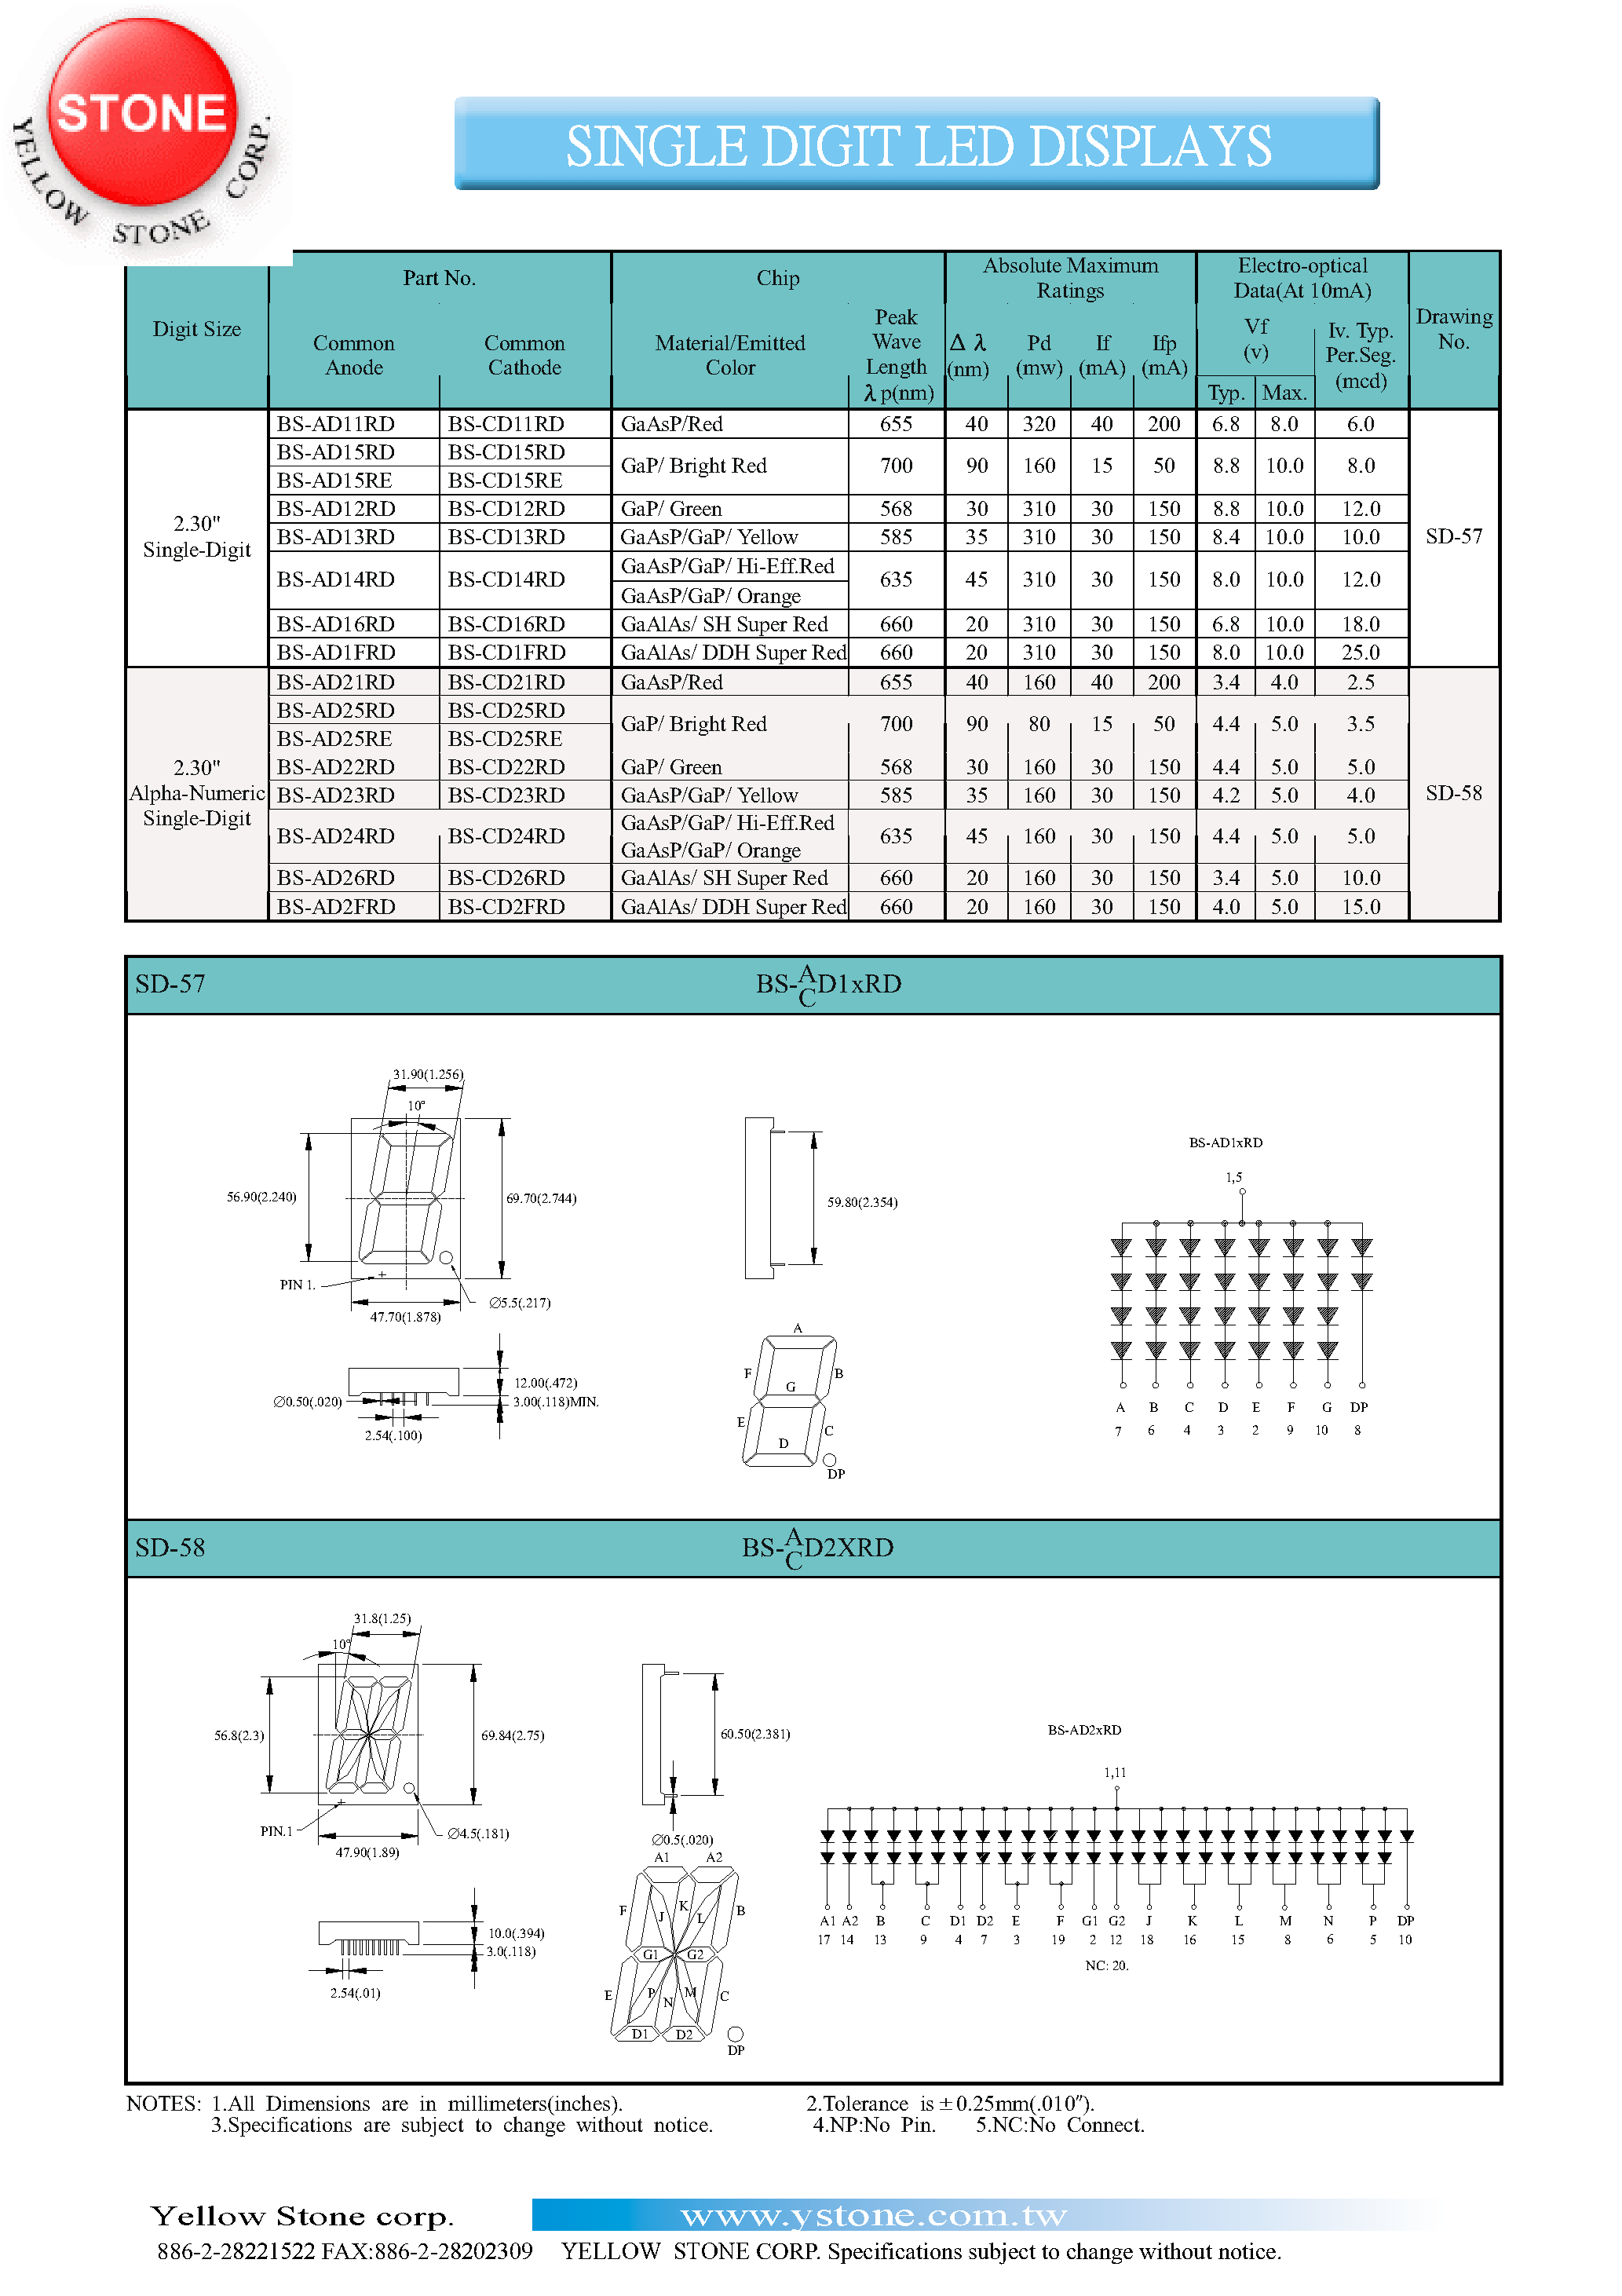 Datasheet BS-AD23RD - SINGLE DIGIT LED DISPLAYS page 1